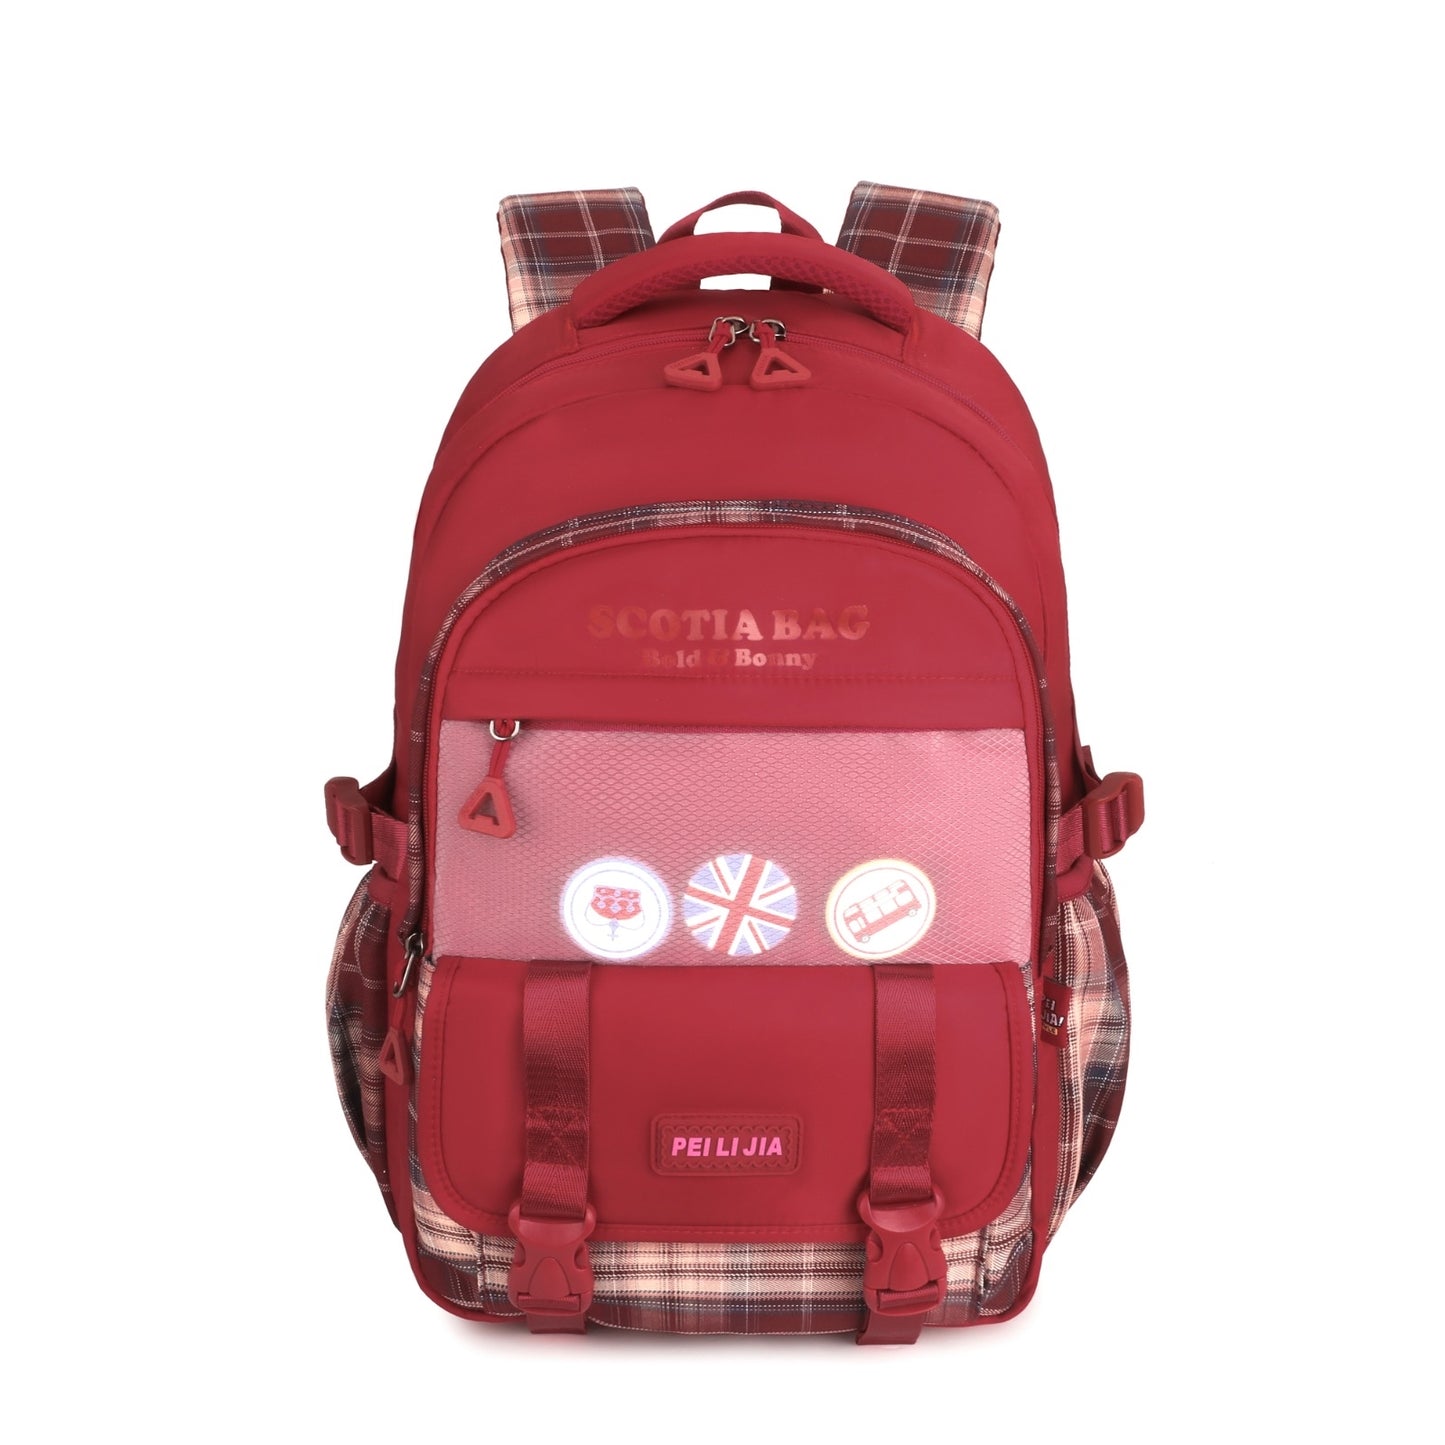 Scotia Luxury School Bags - 18”